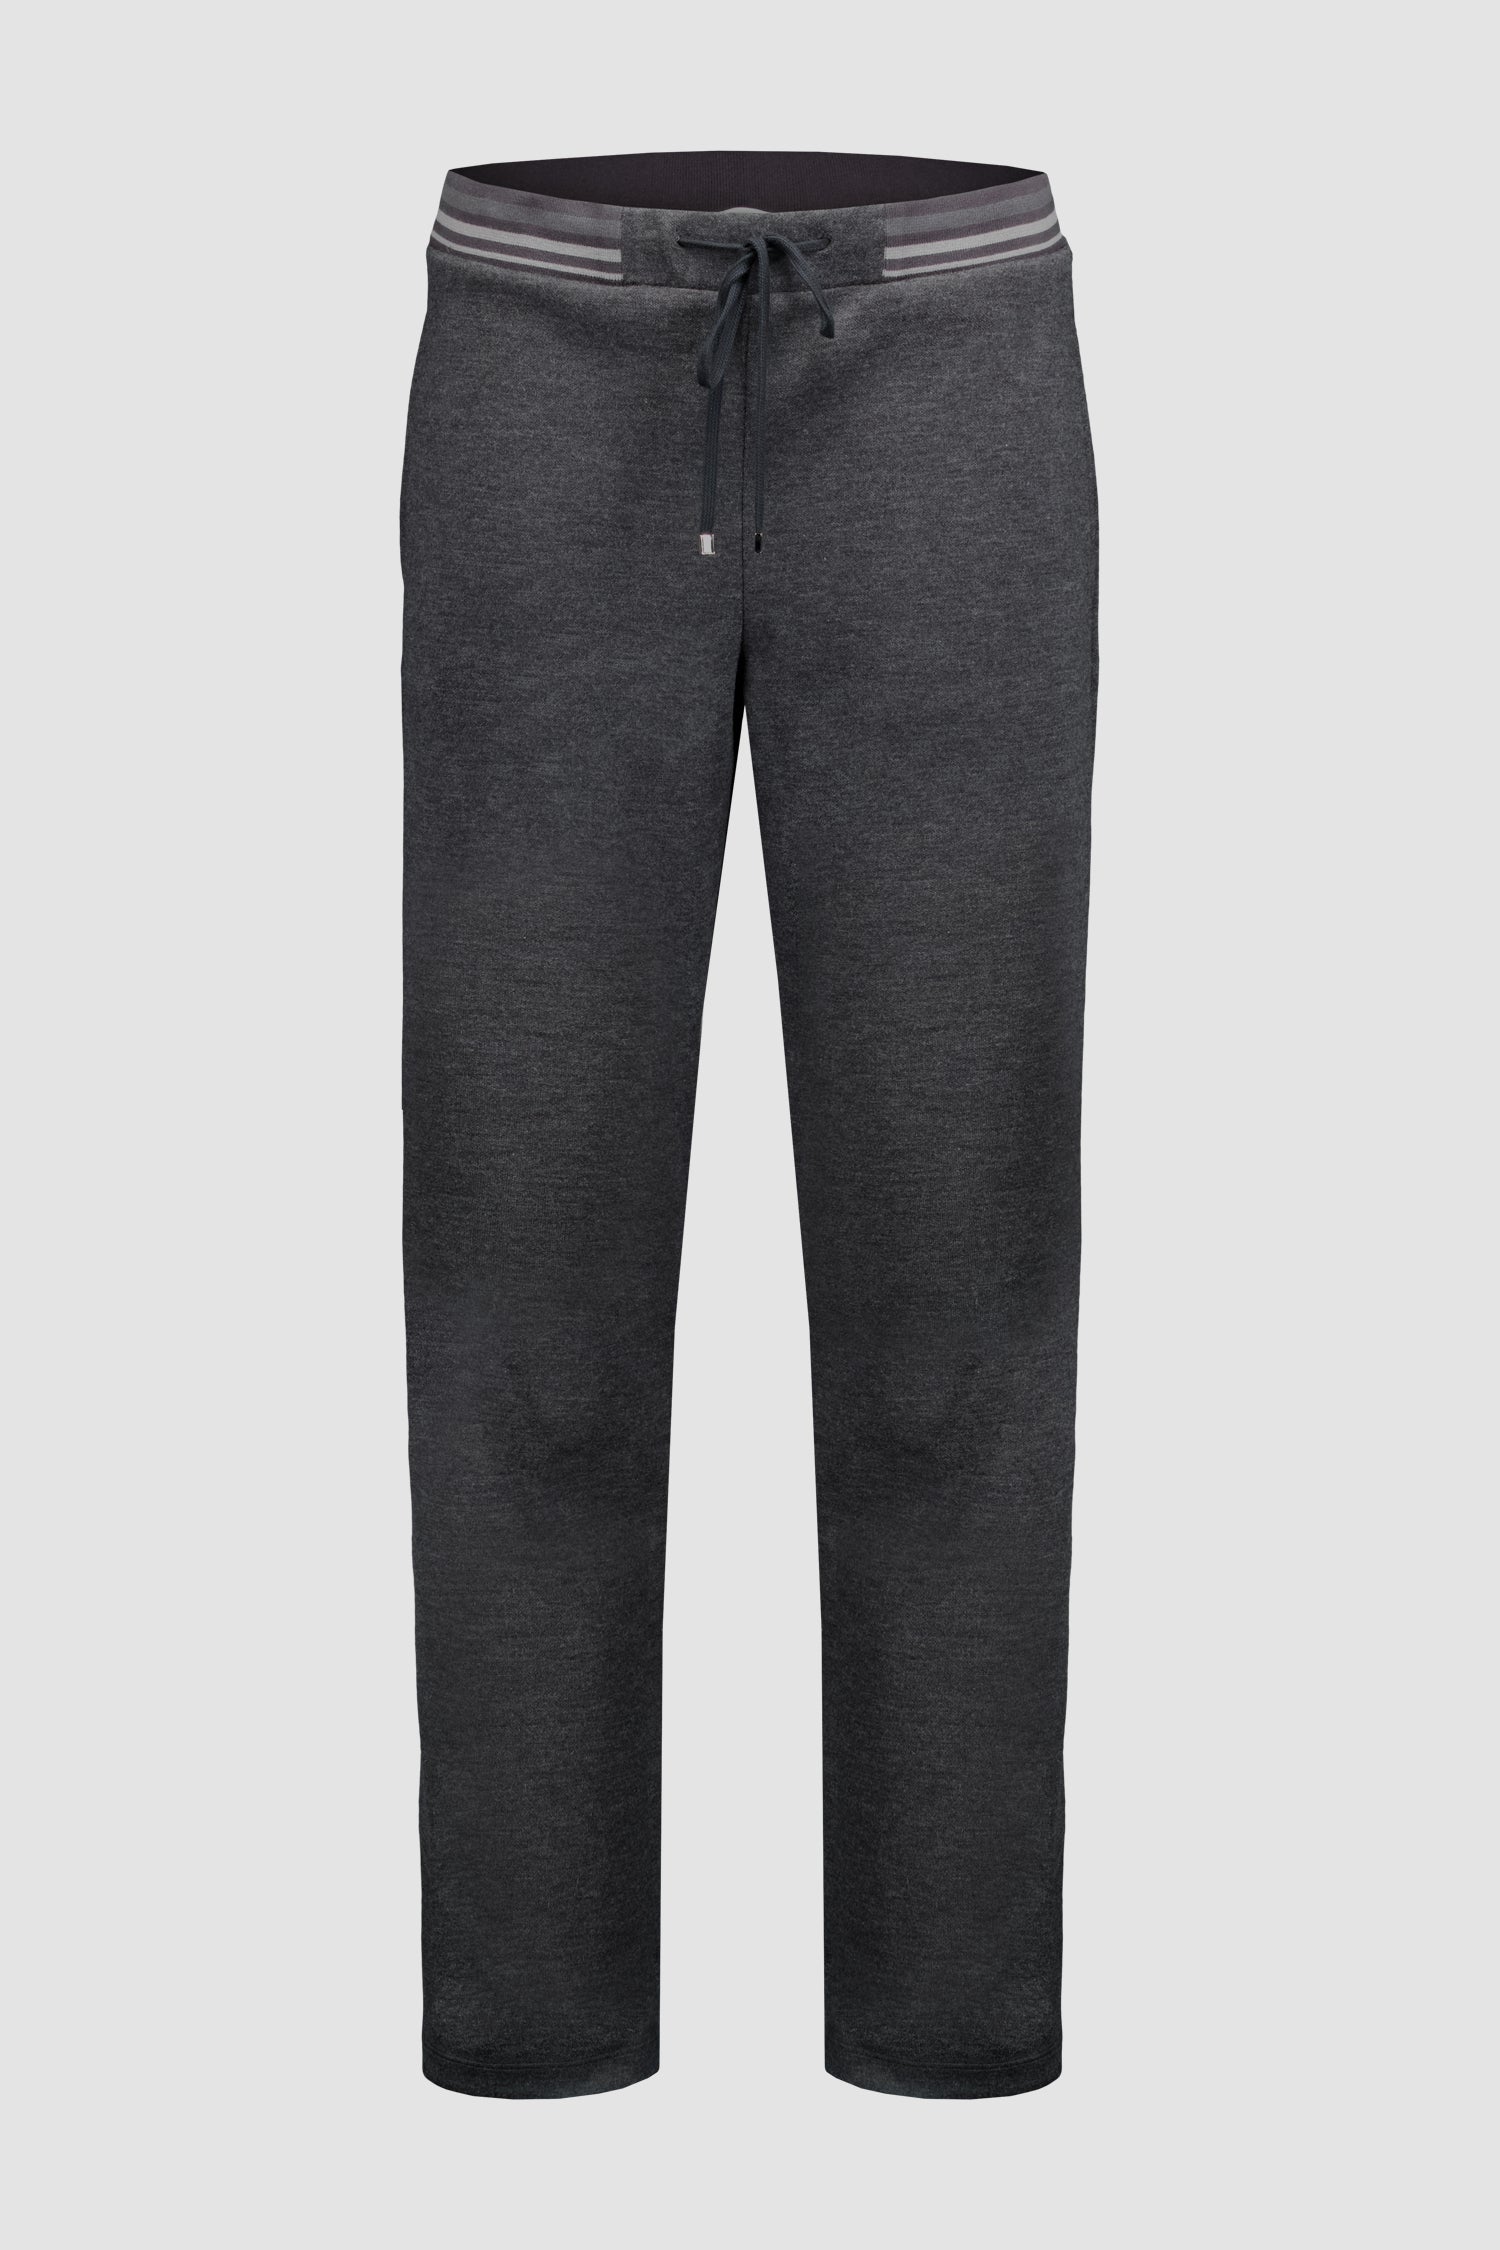 Grey Formal Pants for Men - ONE identiti - Wear your identity